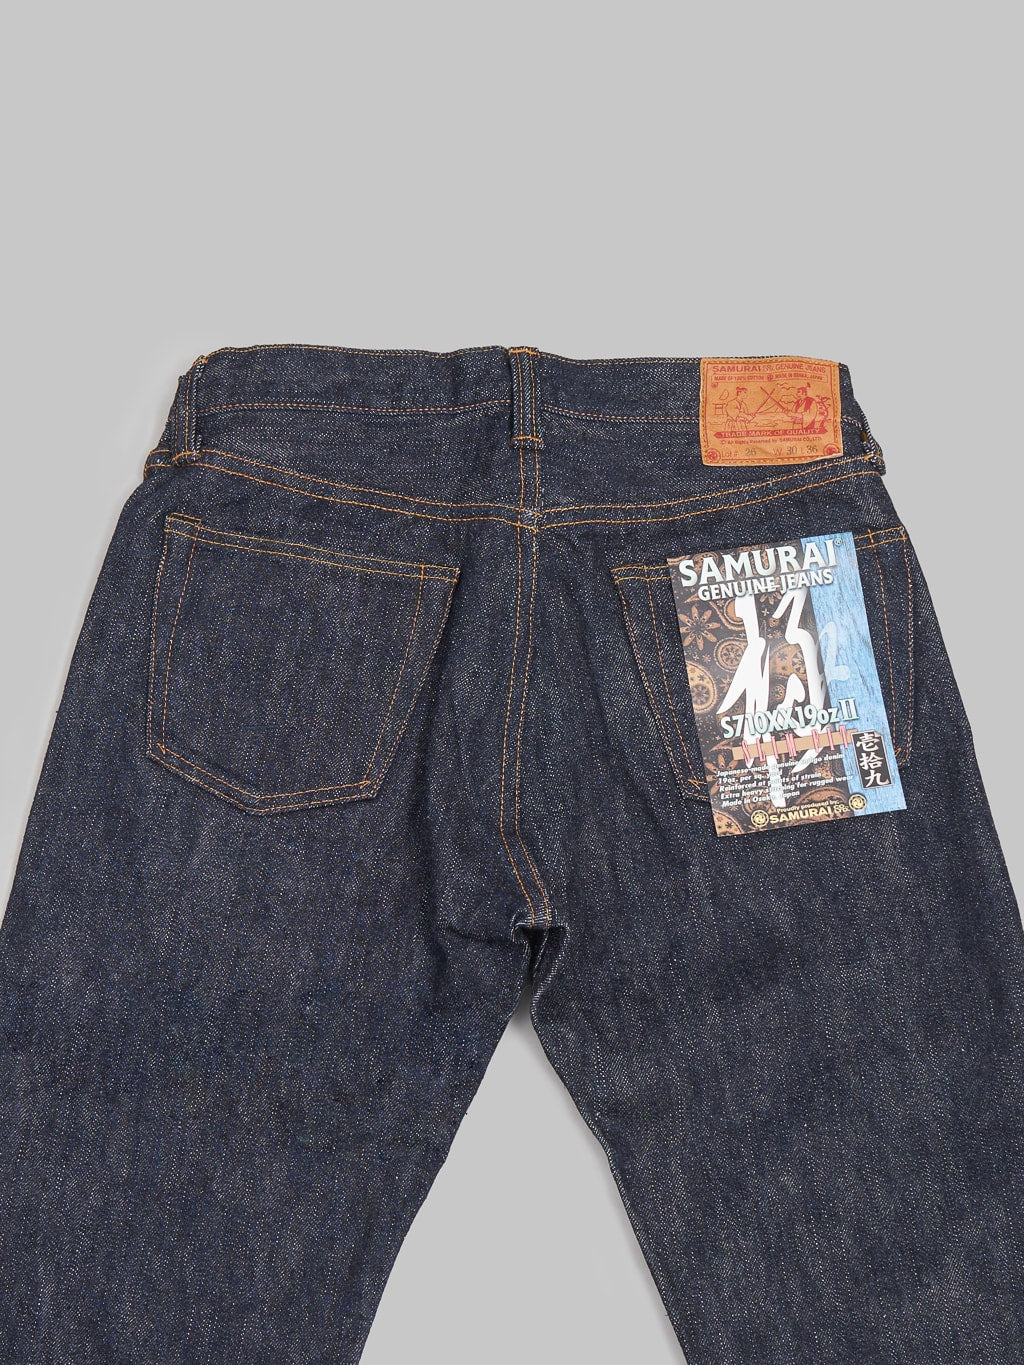 samurai jeans S710XX 19oz slim straight jeans back details